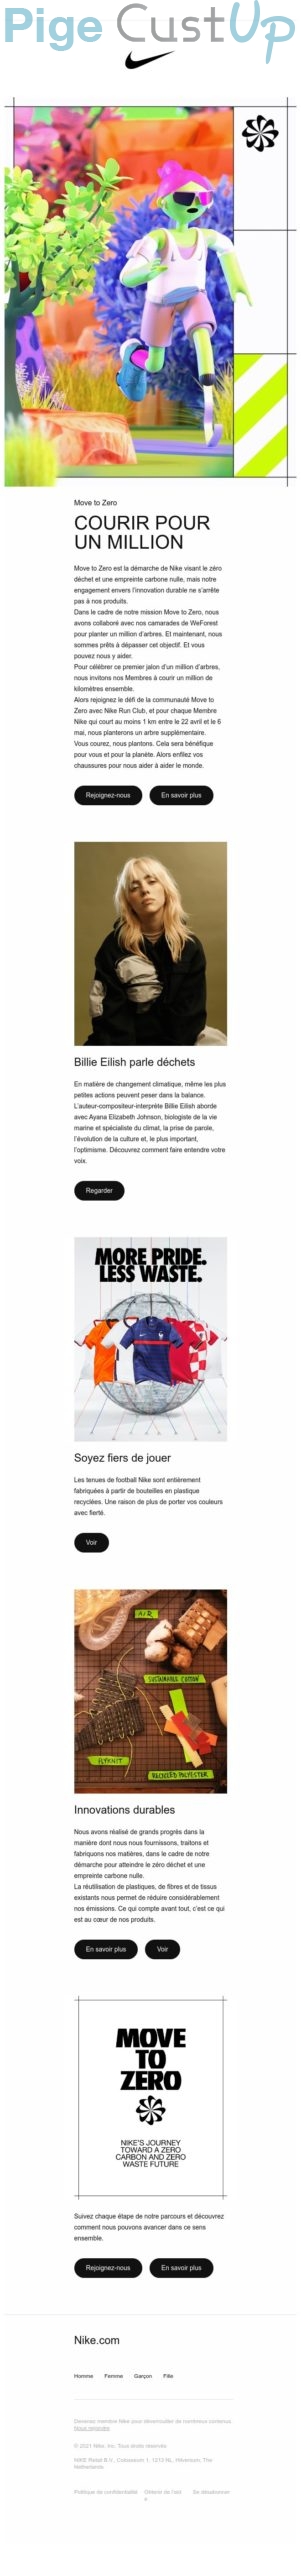 Exemple de Type de media  e-mailing - Nike - Marketing relationnel - Newsletter